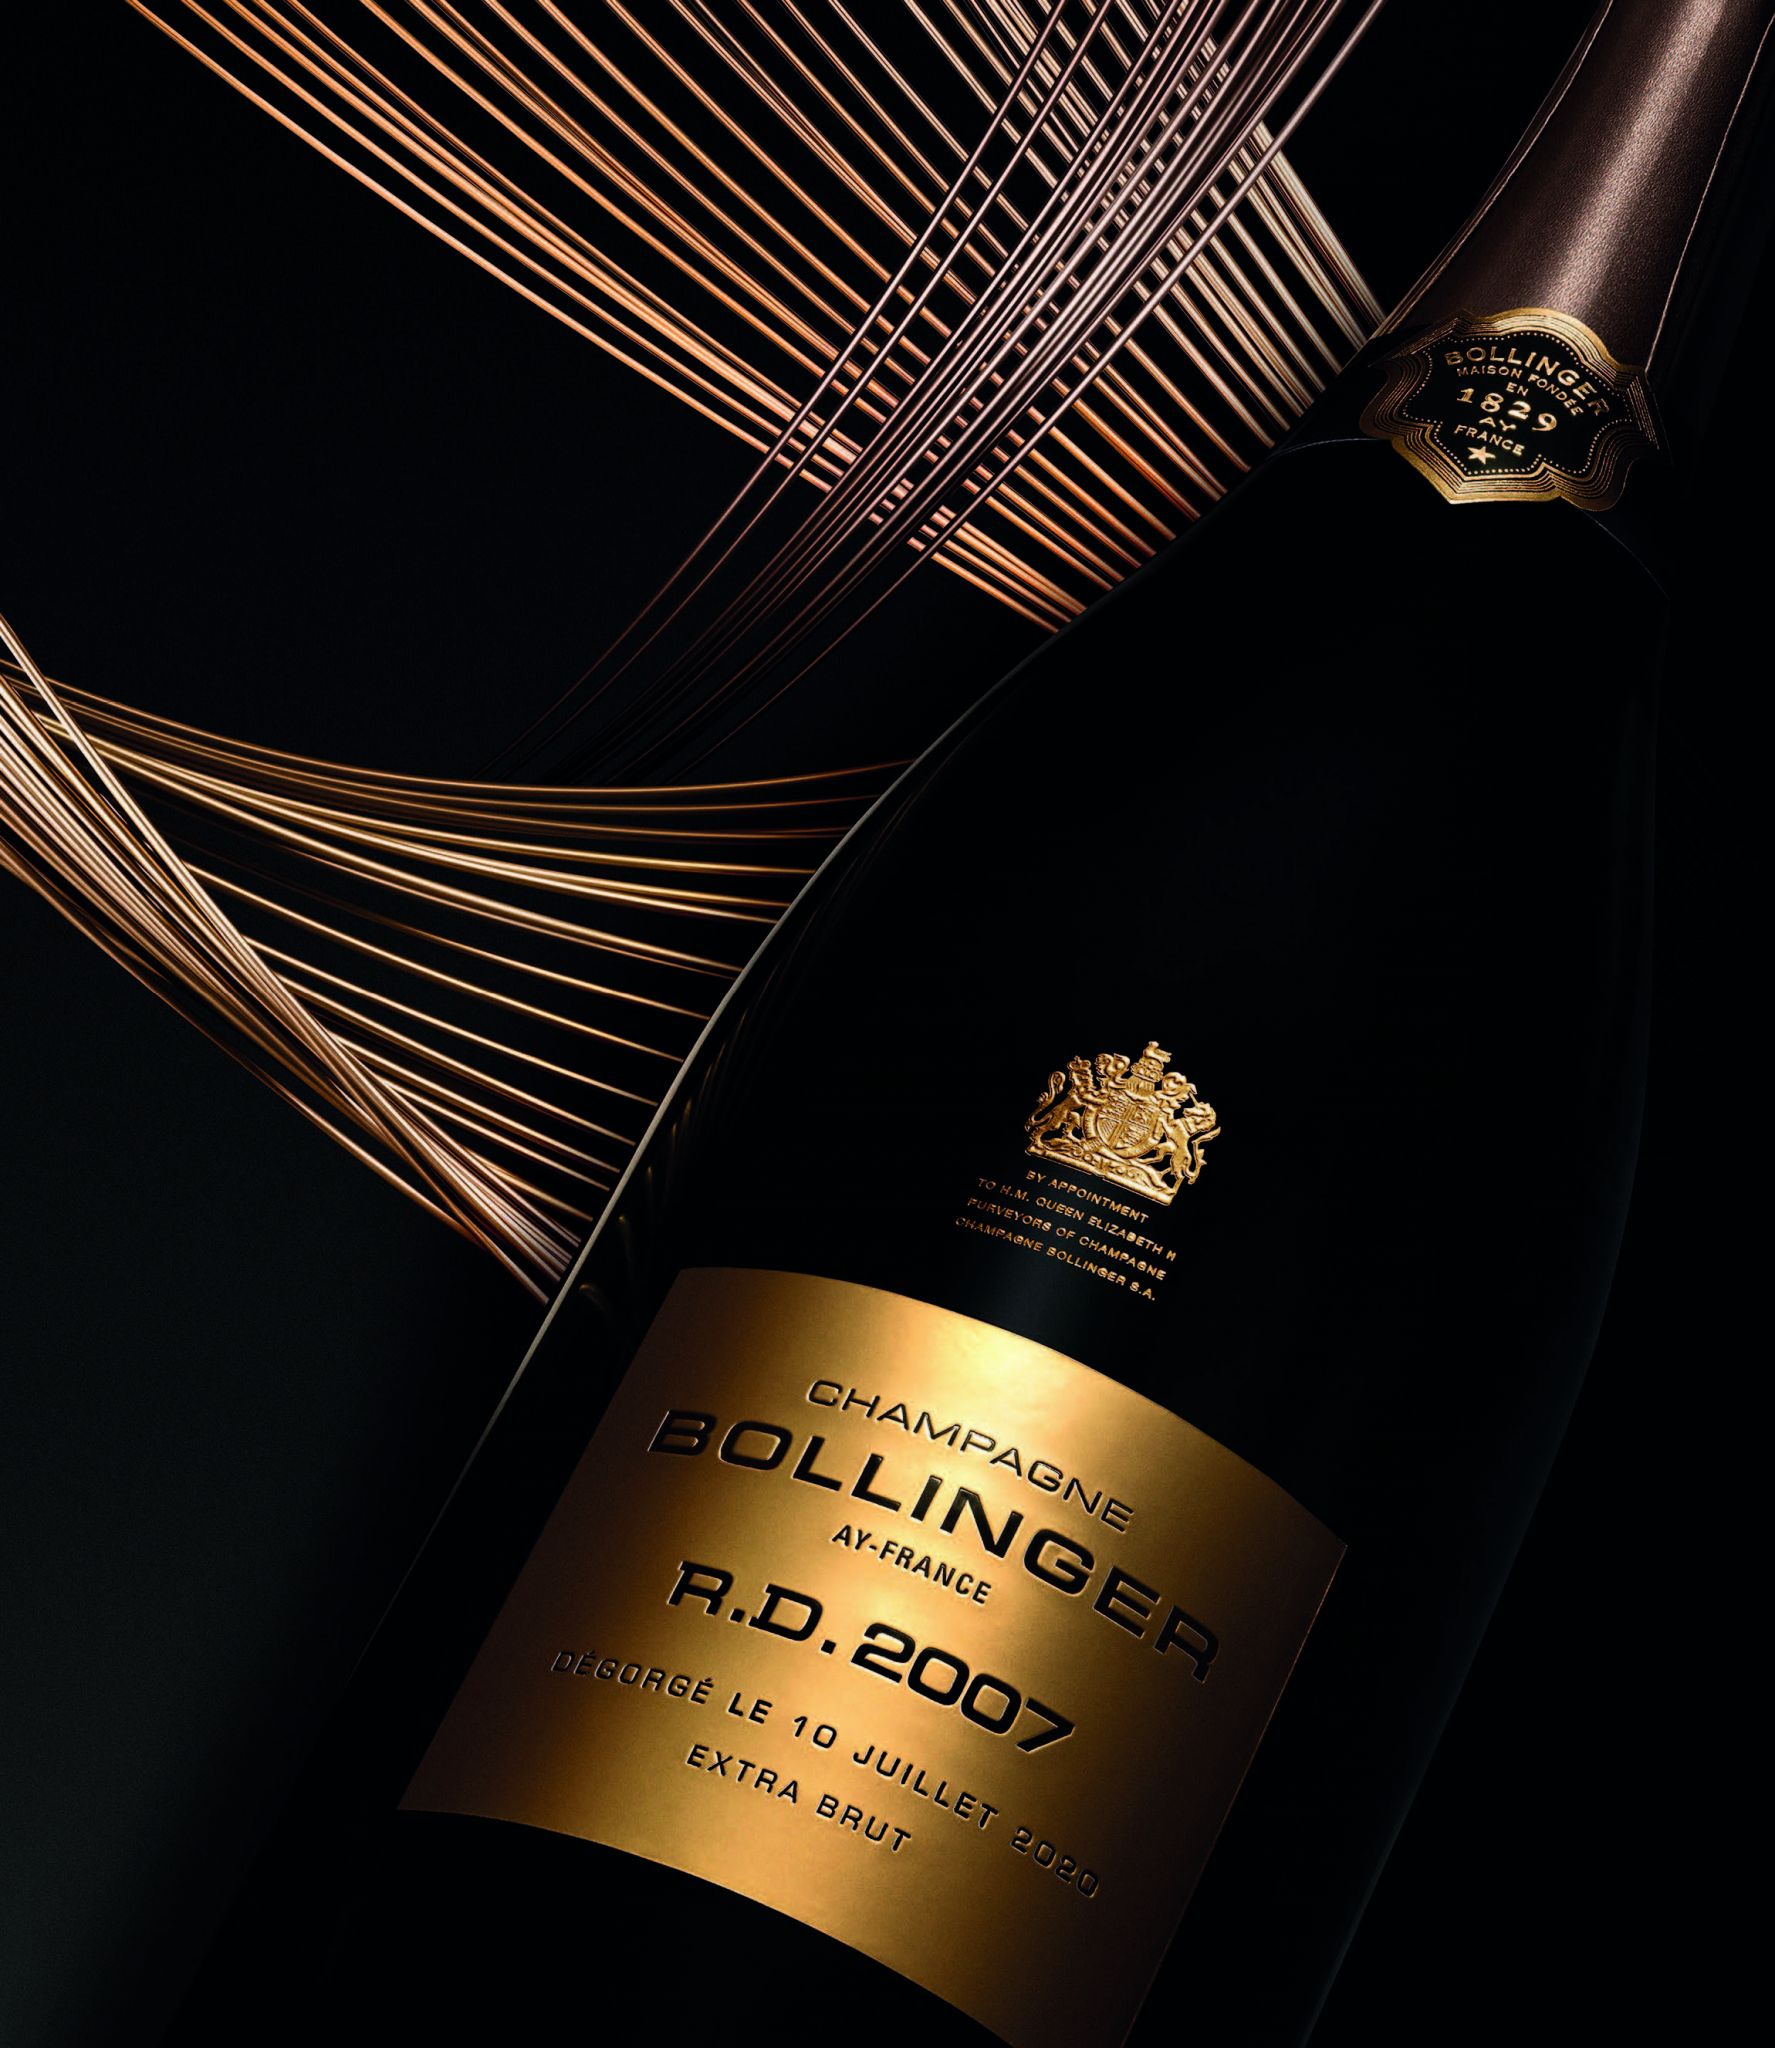 Champagne Bollinger R.D. 2007 - Vintus